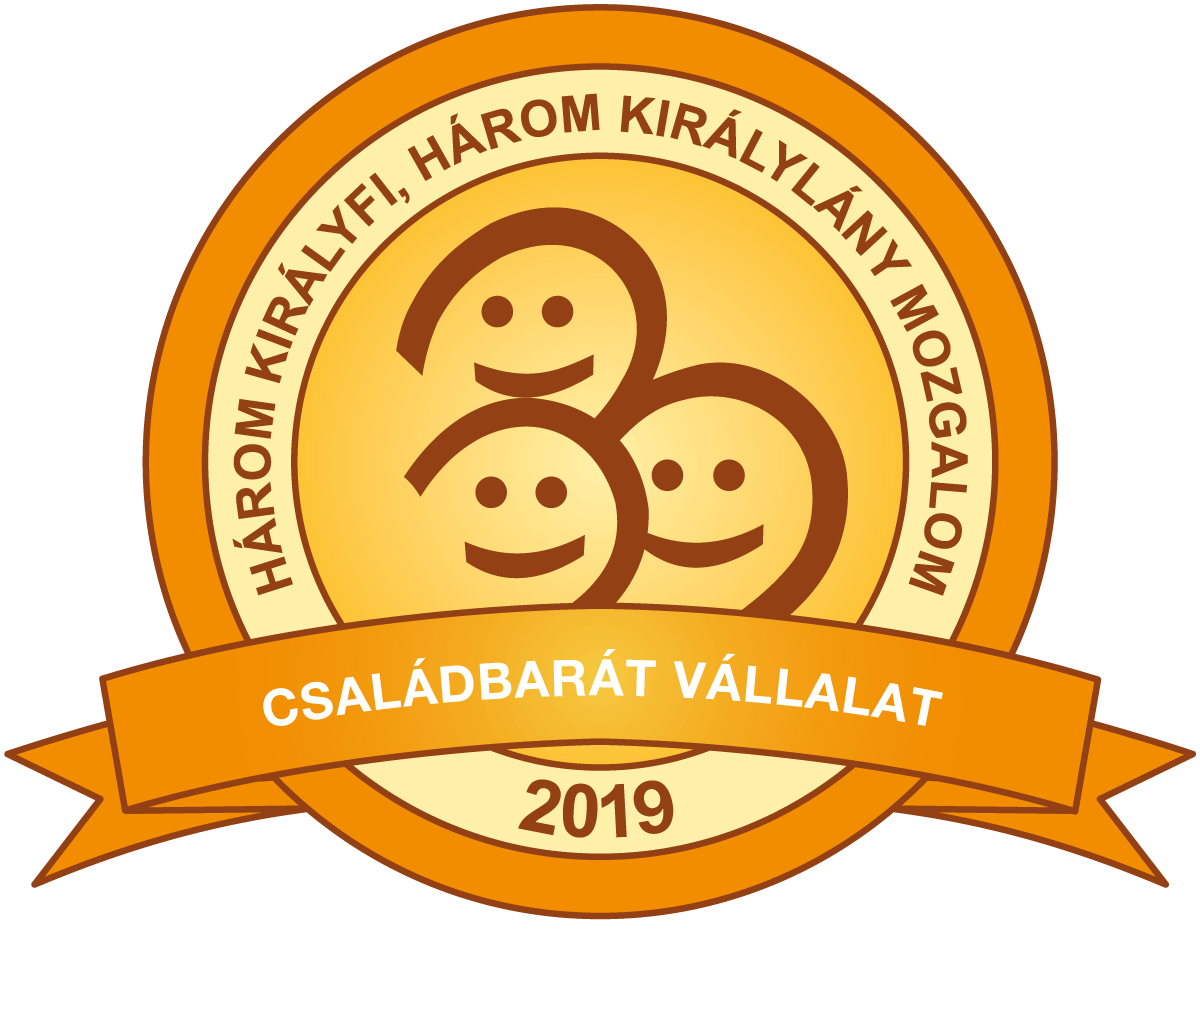 csaladbarat-vallalat-20193.png